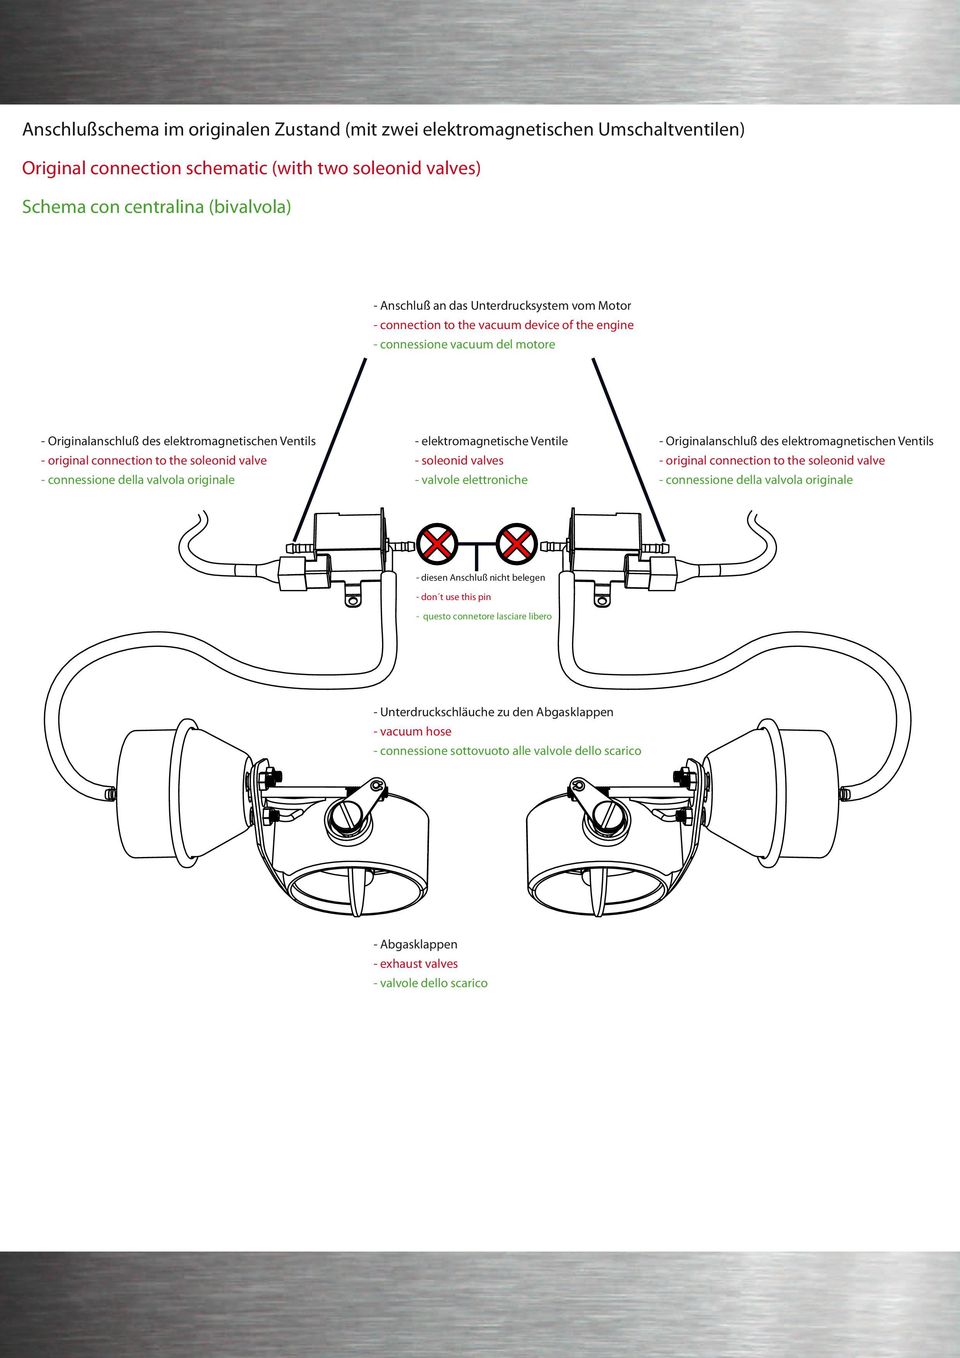 valve - connessione della valvola originale - elektromagnetische Ventile - soleonid valves - valvole elettroniche - Originalanschluß des elektromagnetischen Ventils - original connection to the